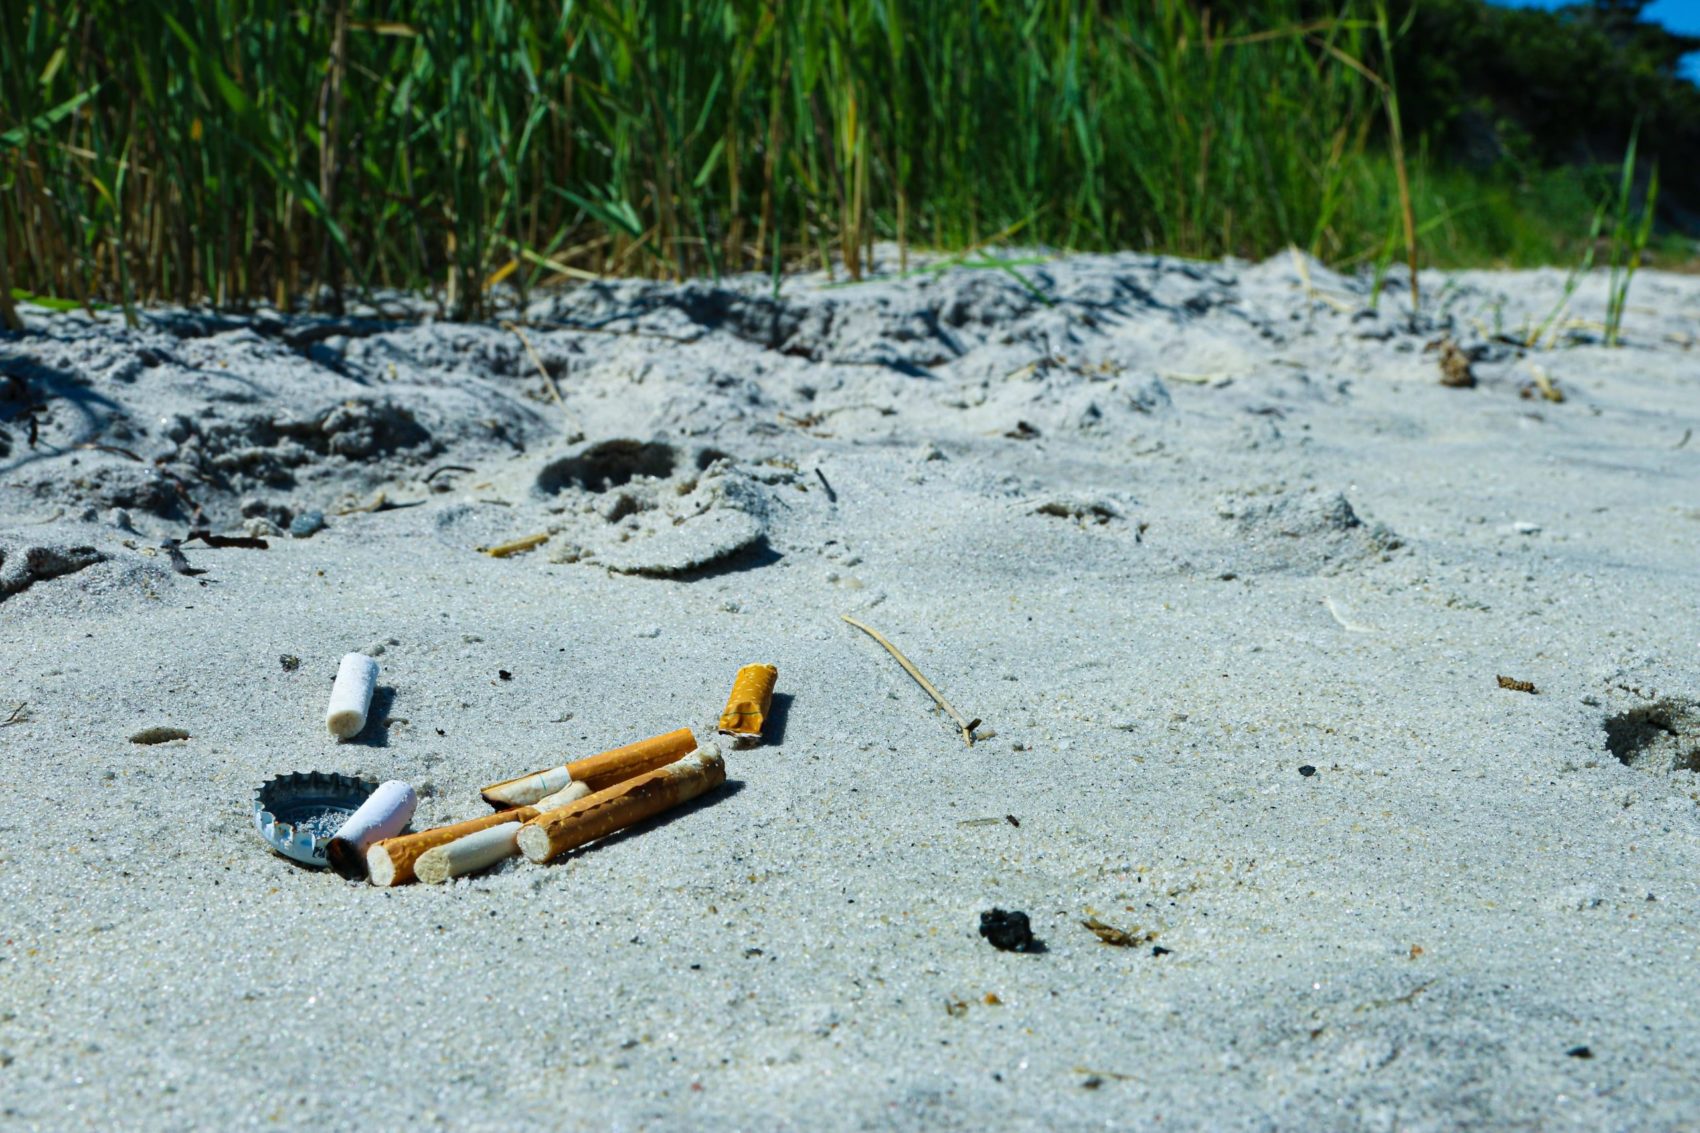 Pollution, Beach, Ocean Ecosystem, Cigarette Butts